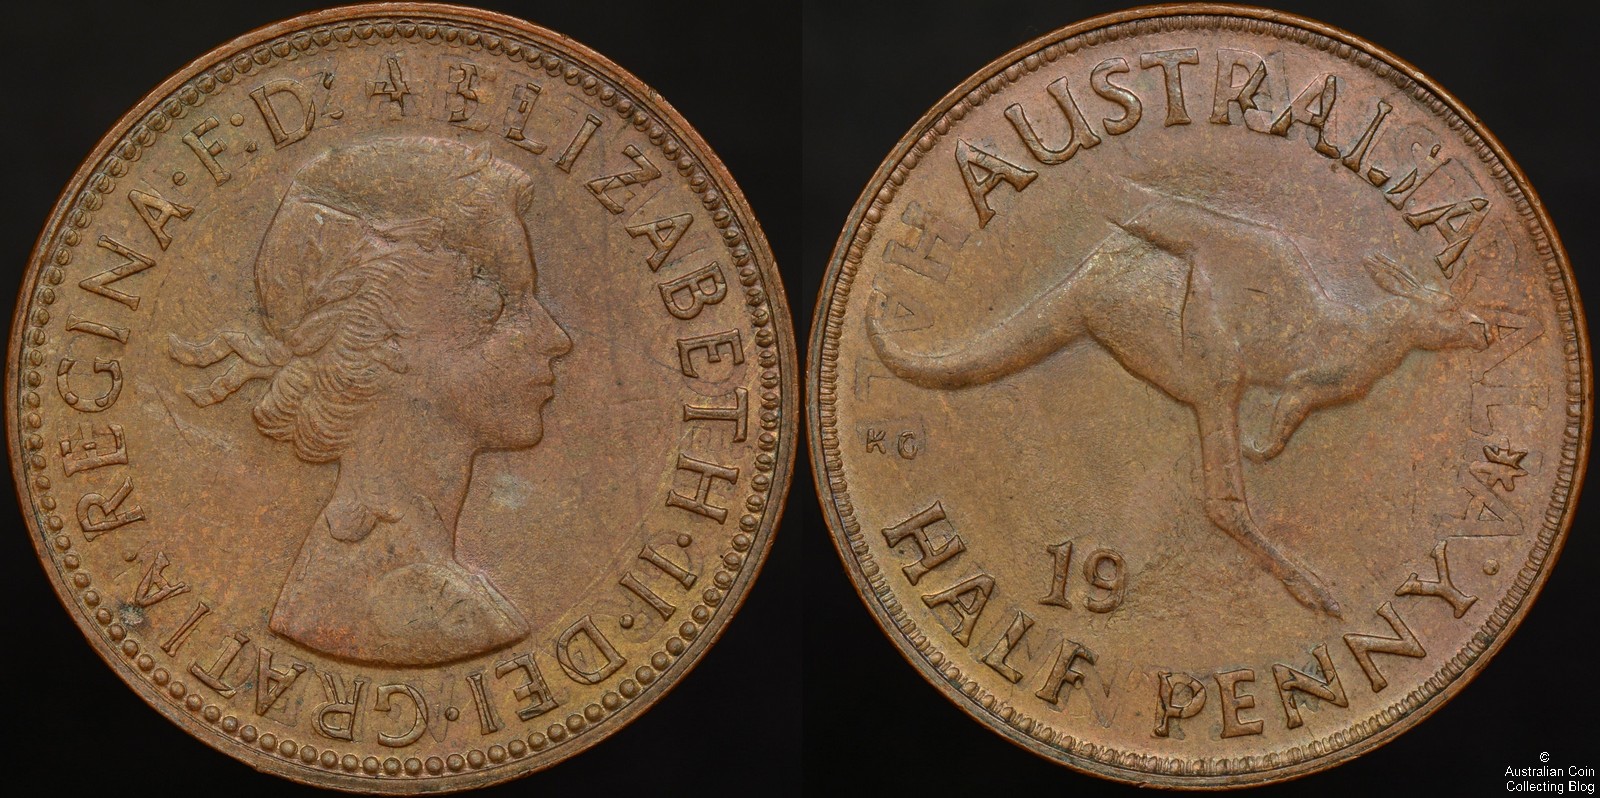 Australia 1964 Half Penny Rotated Double Strike Error